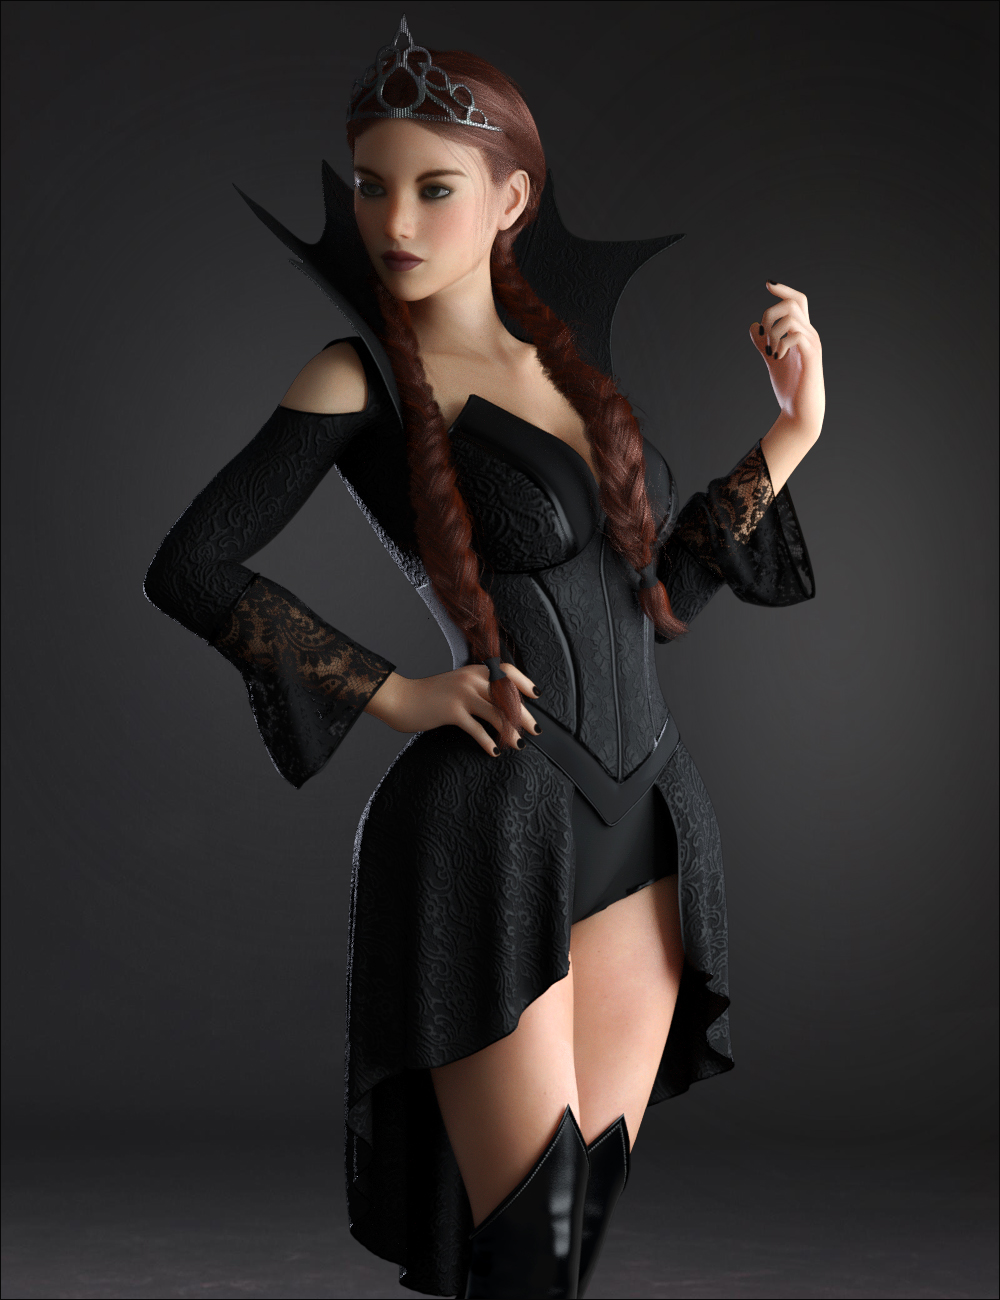 dForce Dark Princess Outfit Set for Genesis 8 and 8.1 Females by: Mytilus3dLab, 3D Models by Daz 3D